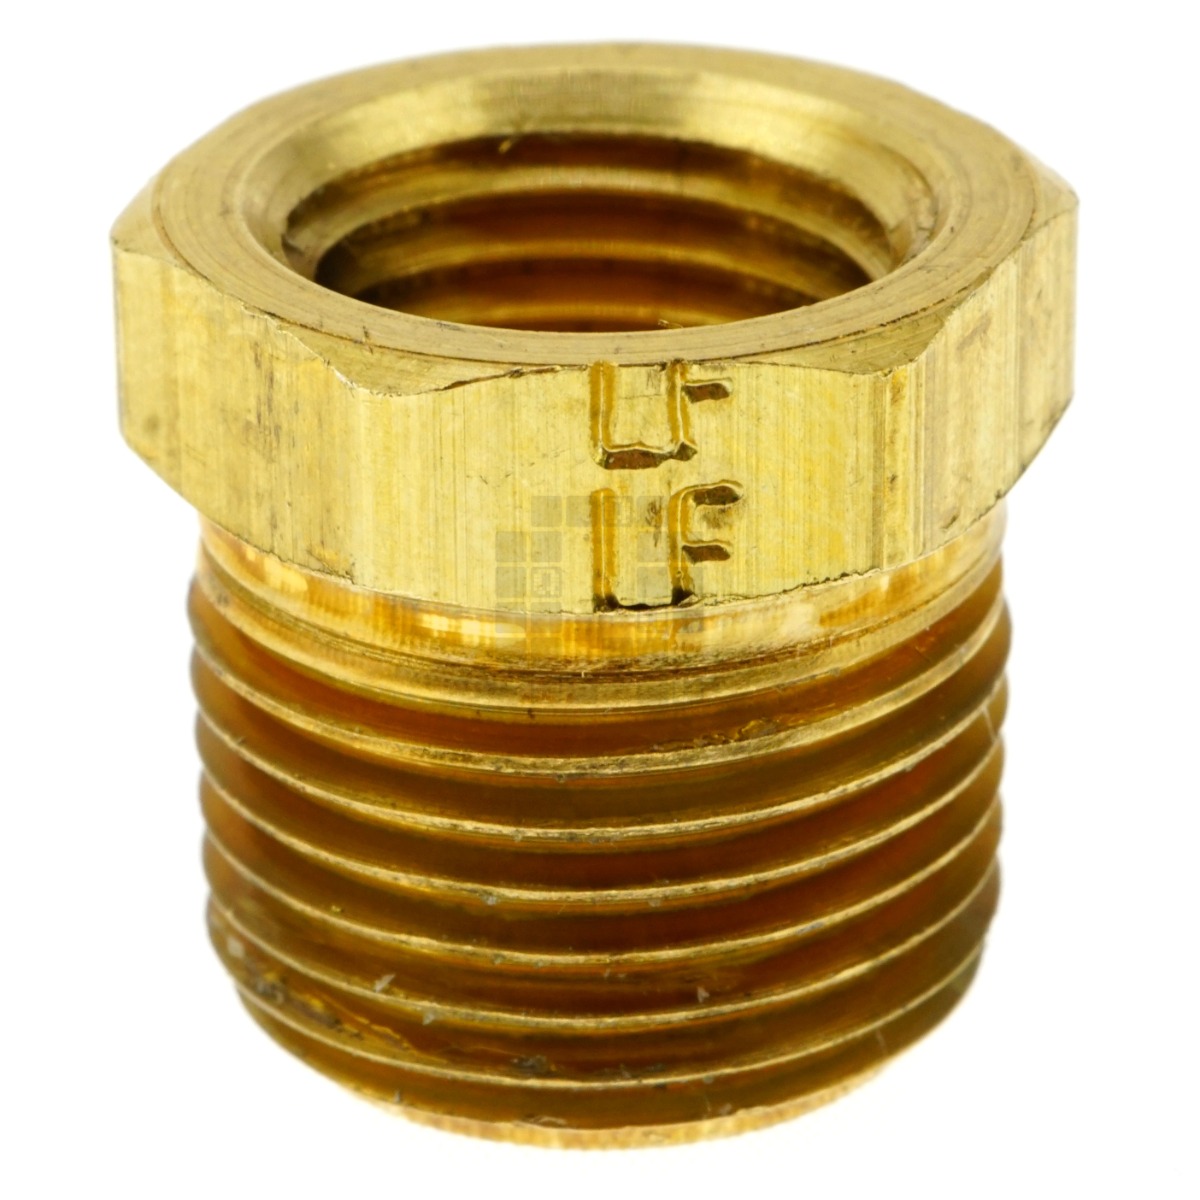 Anderson Metals 756110-0604 3/8" x 1/4" NPT Hex Brass Reducing Adapter Bushing